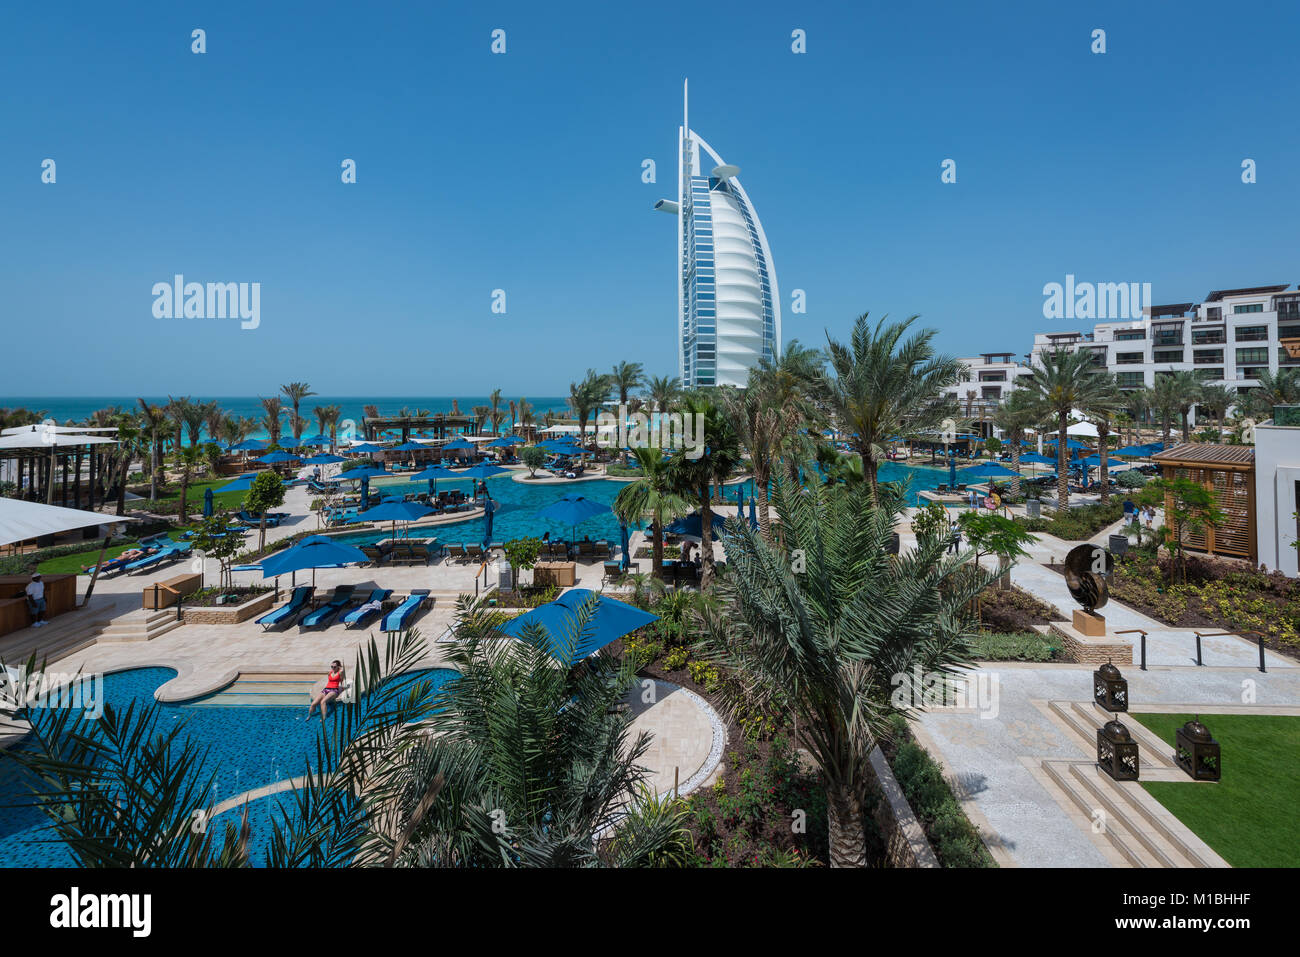 Views of the luxury beachfront hotel Burj Al Arab located on a man-made island in Dubai, UAE, United Arab Emirates Stock Photo